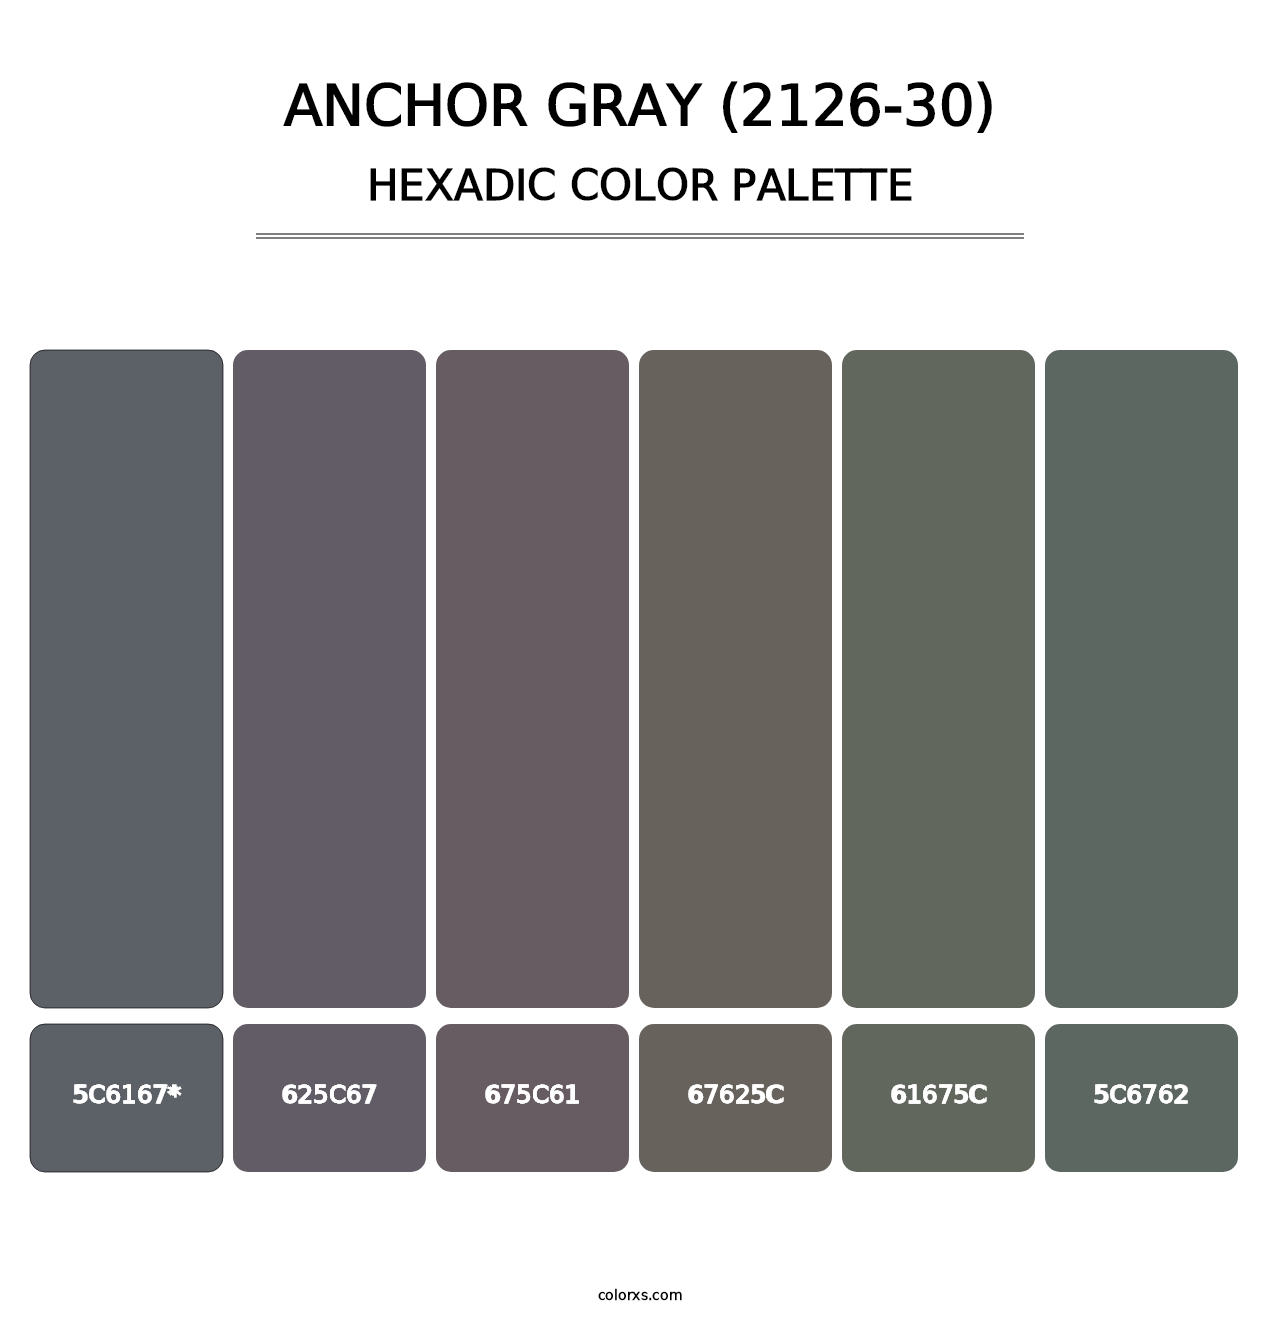 Anchor Gray (2126-30) - Hexadic Color Palette